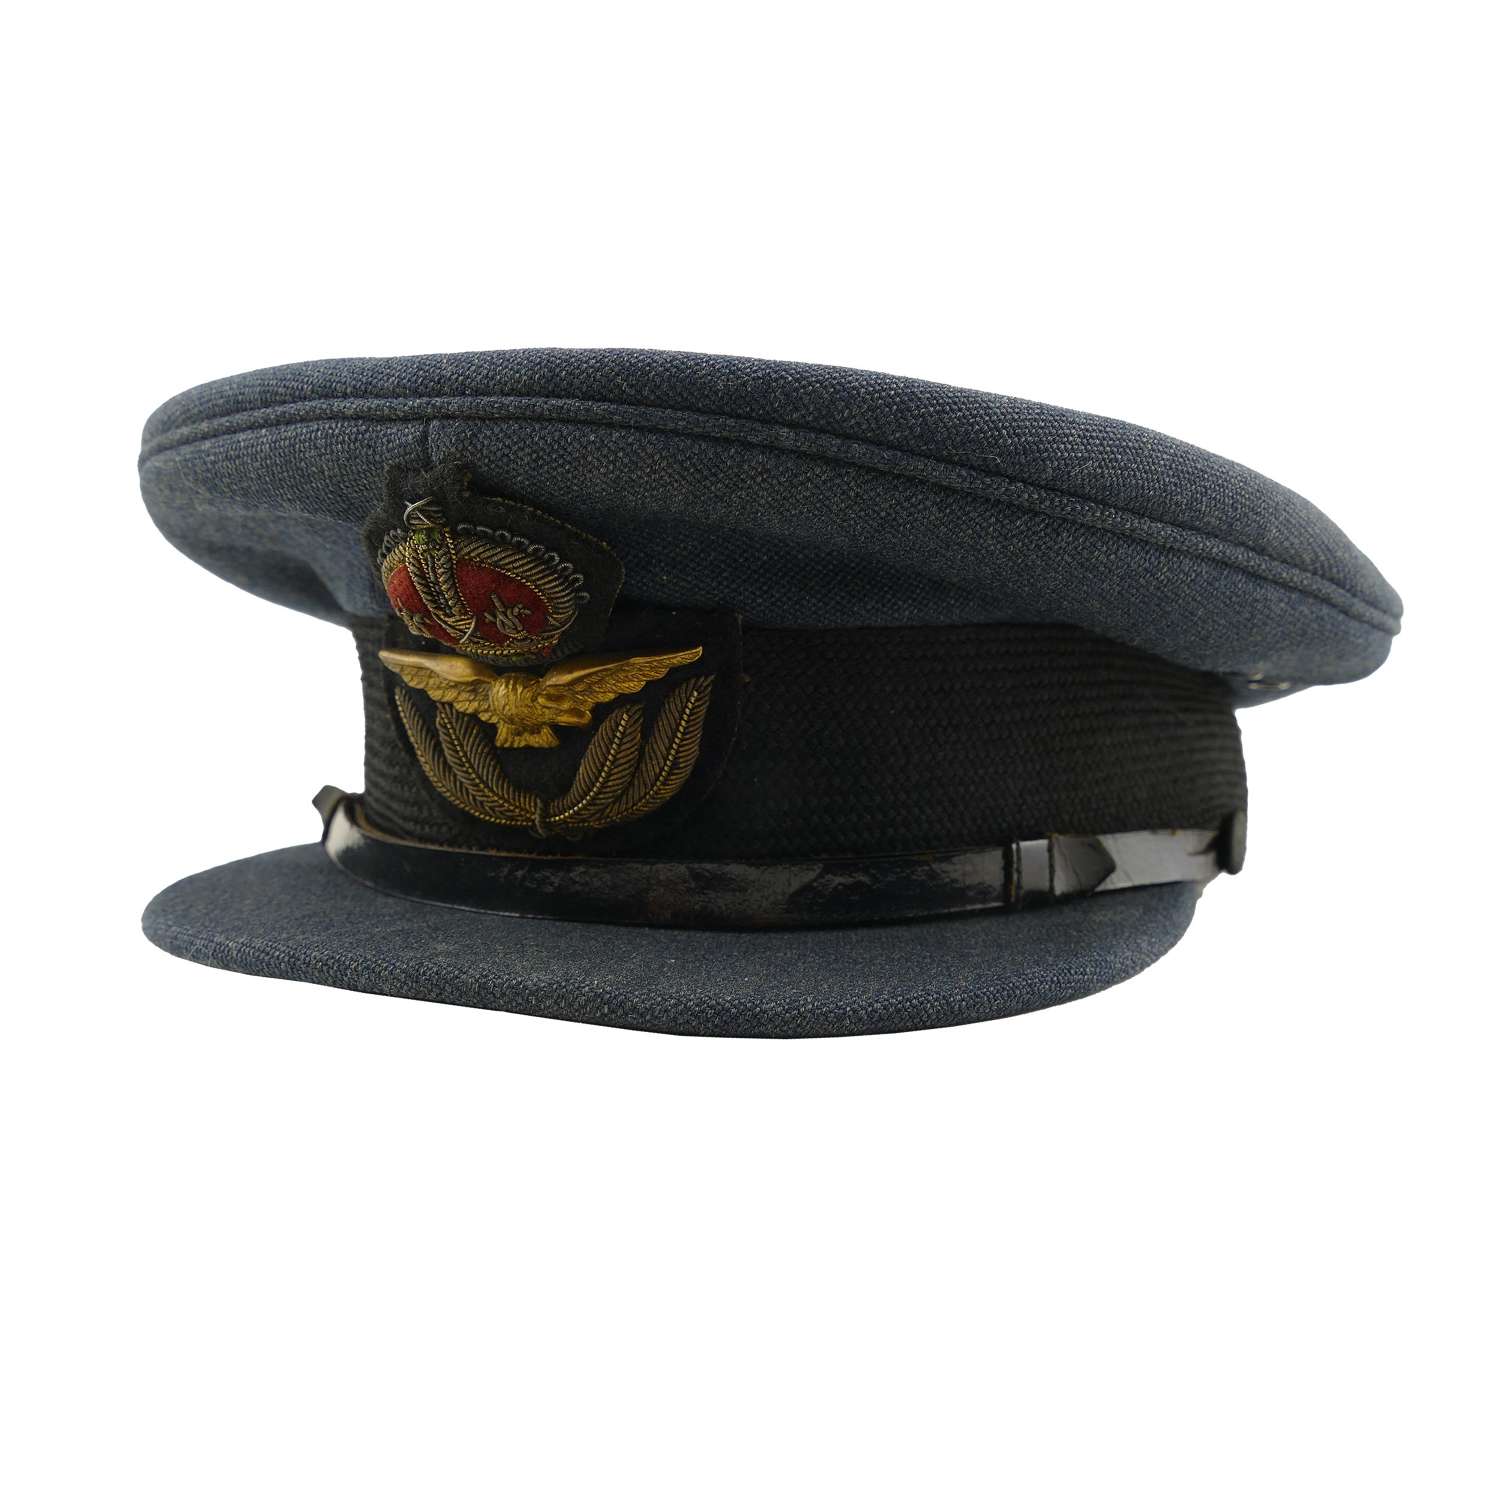 RAF officer rank service dress cap - history